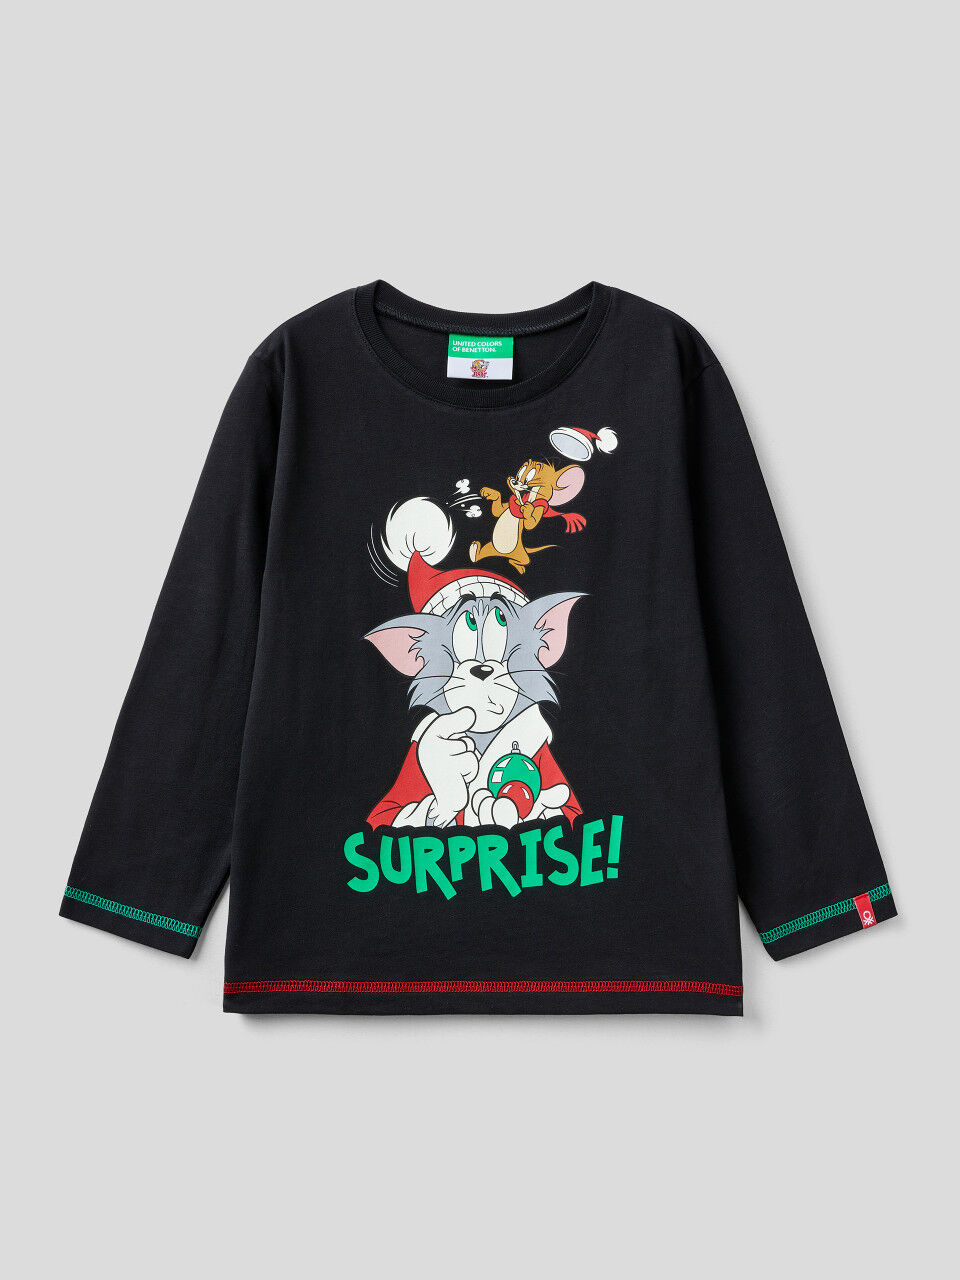 Camiseta de Tom & Jerry navideña